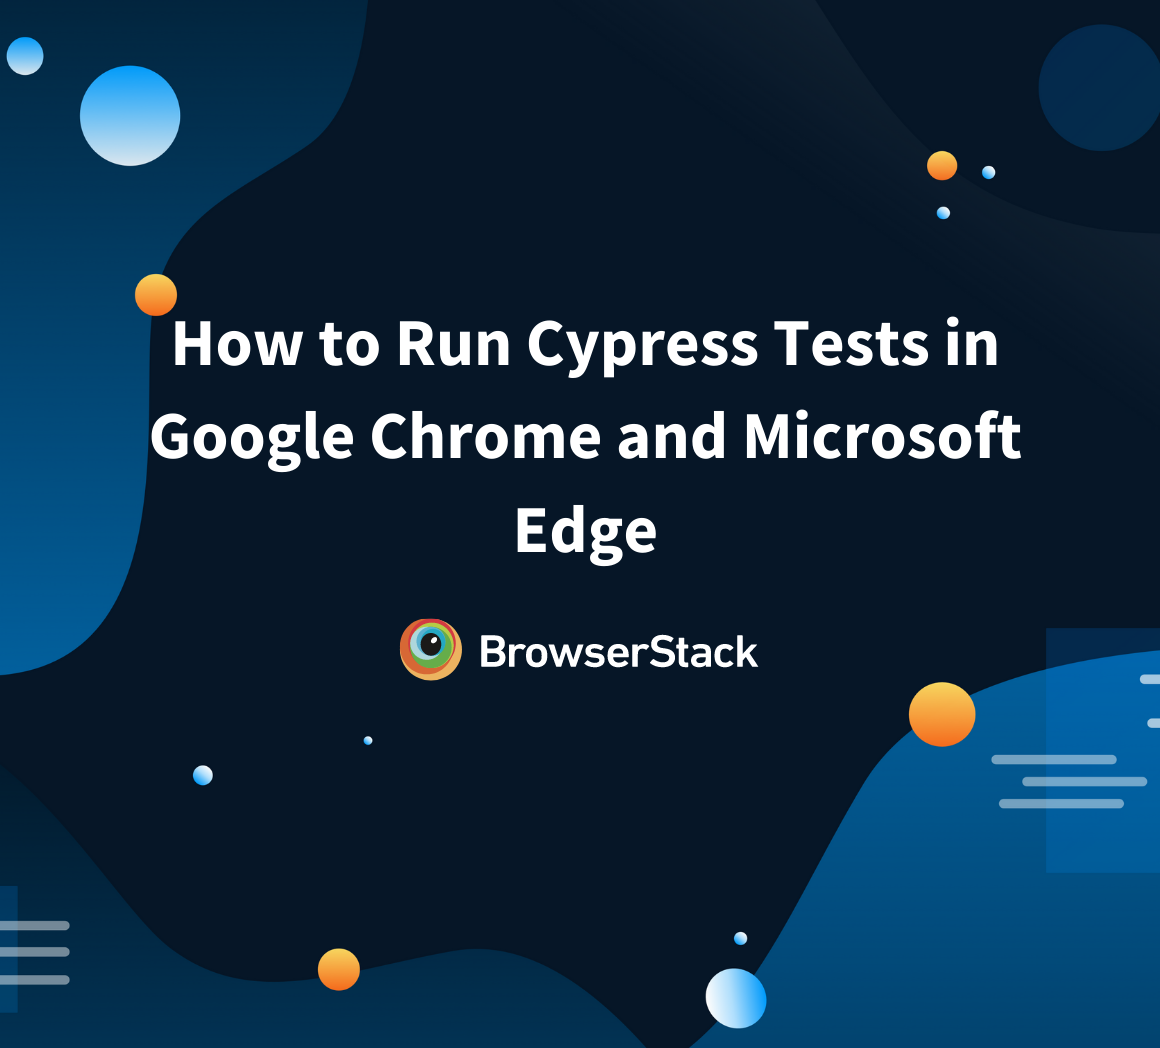 Cypress testing on Chrome and Edge